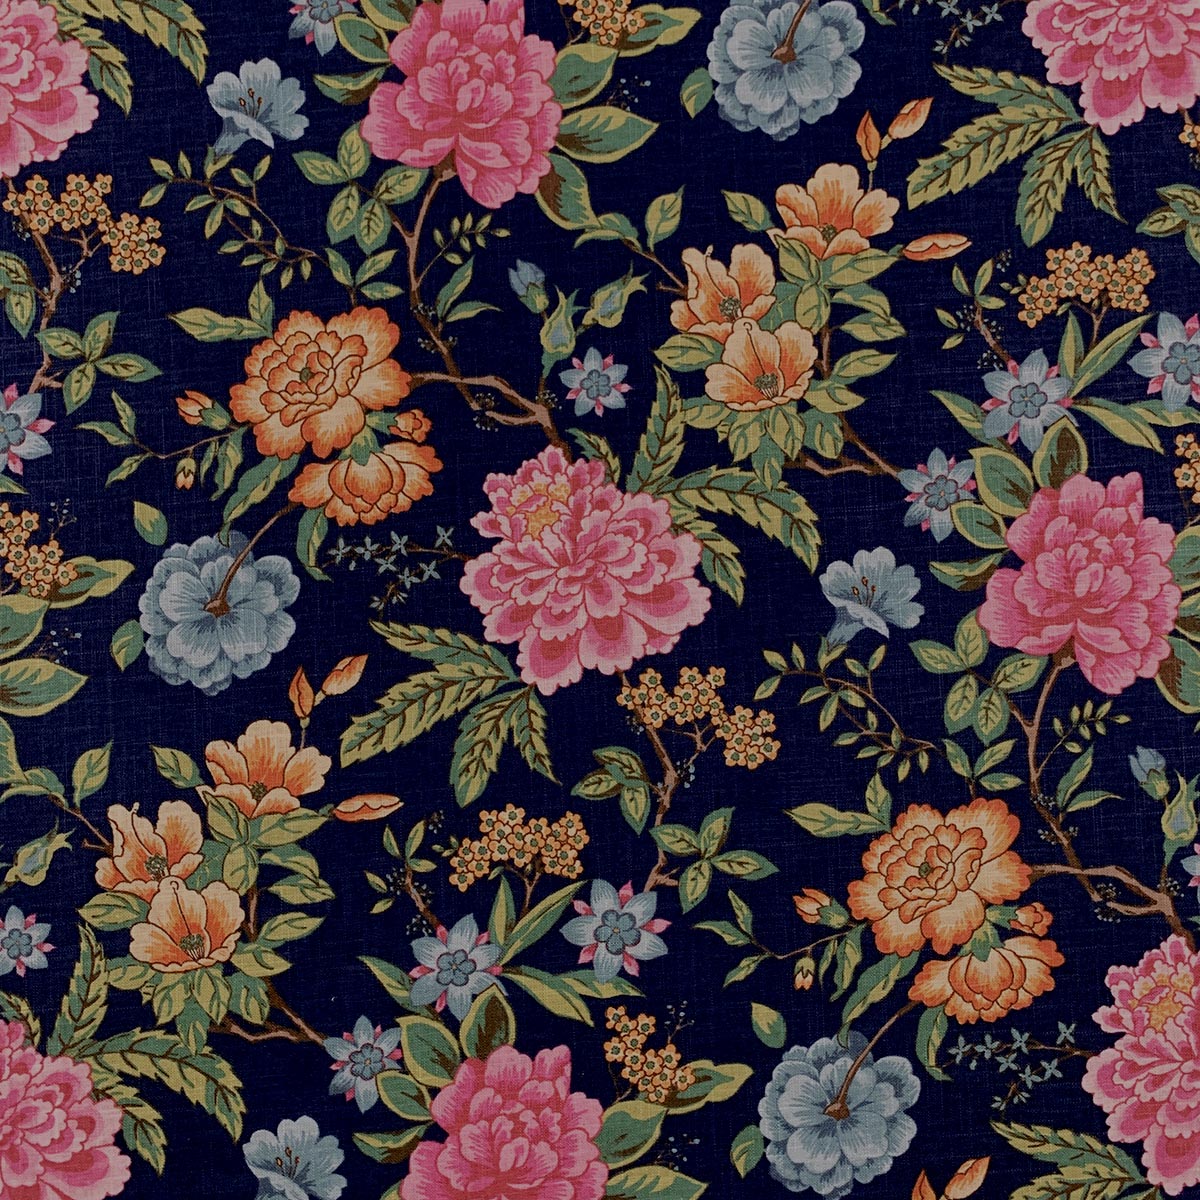 Purchase Mag FabricPattern 11417 pattern name Garden Festiva